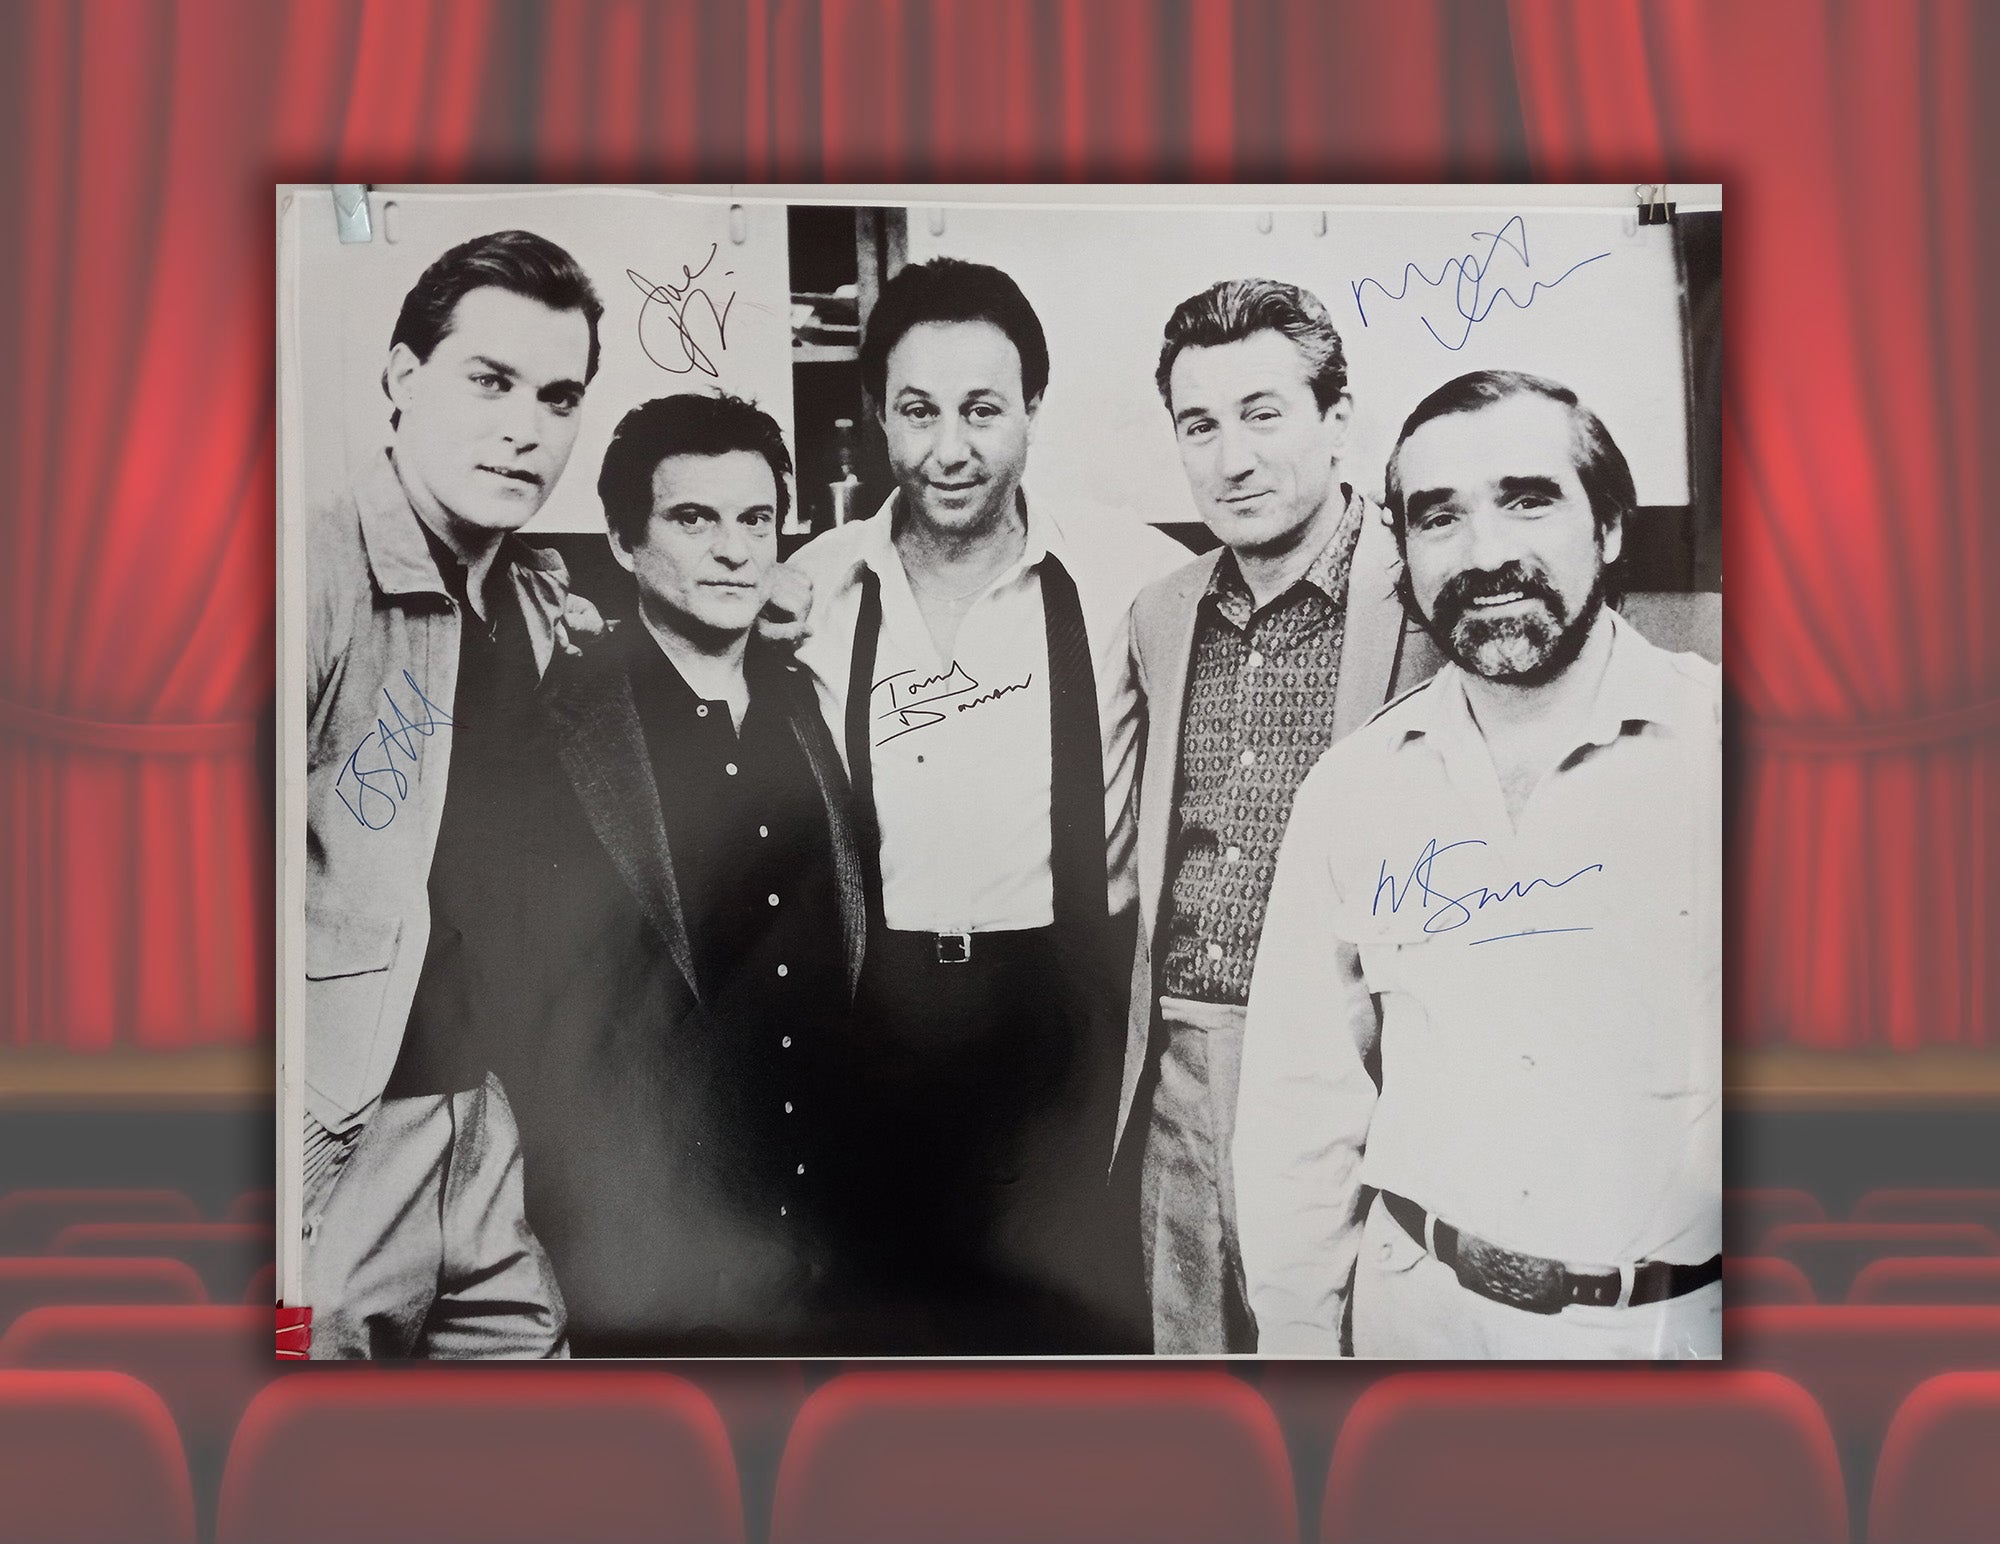 Goodfellas Ray Liotta, Robert De Niro, Joe Pesci, Martin Scorsese 24x30 photo signed with proof